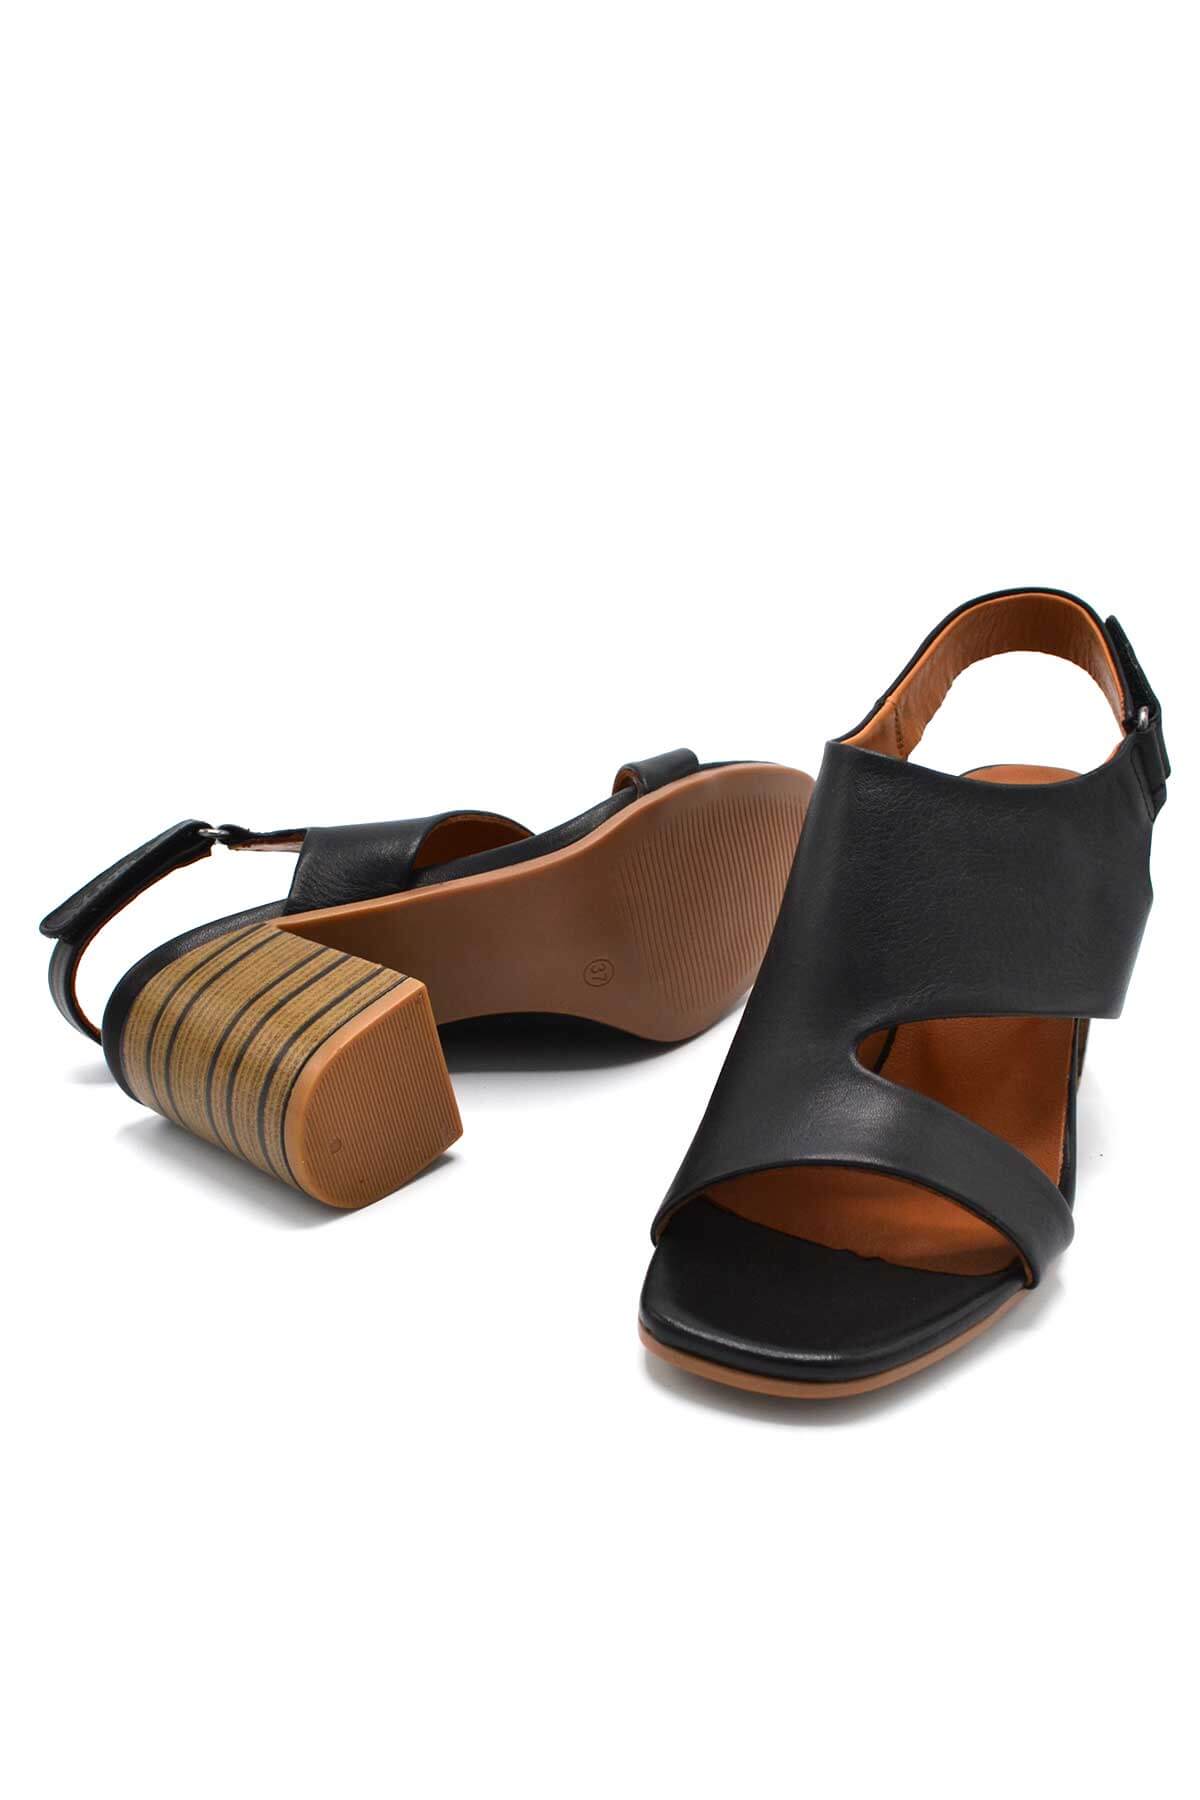 Kadın Topuklu Deri Sandalet Siyah 2108502Y - Thumbnail